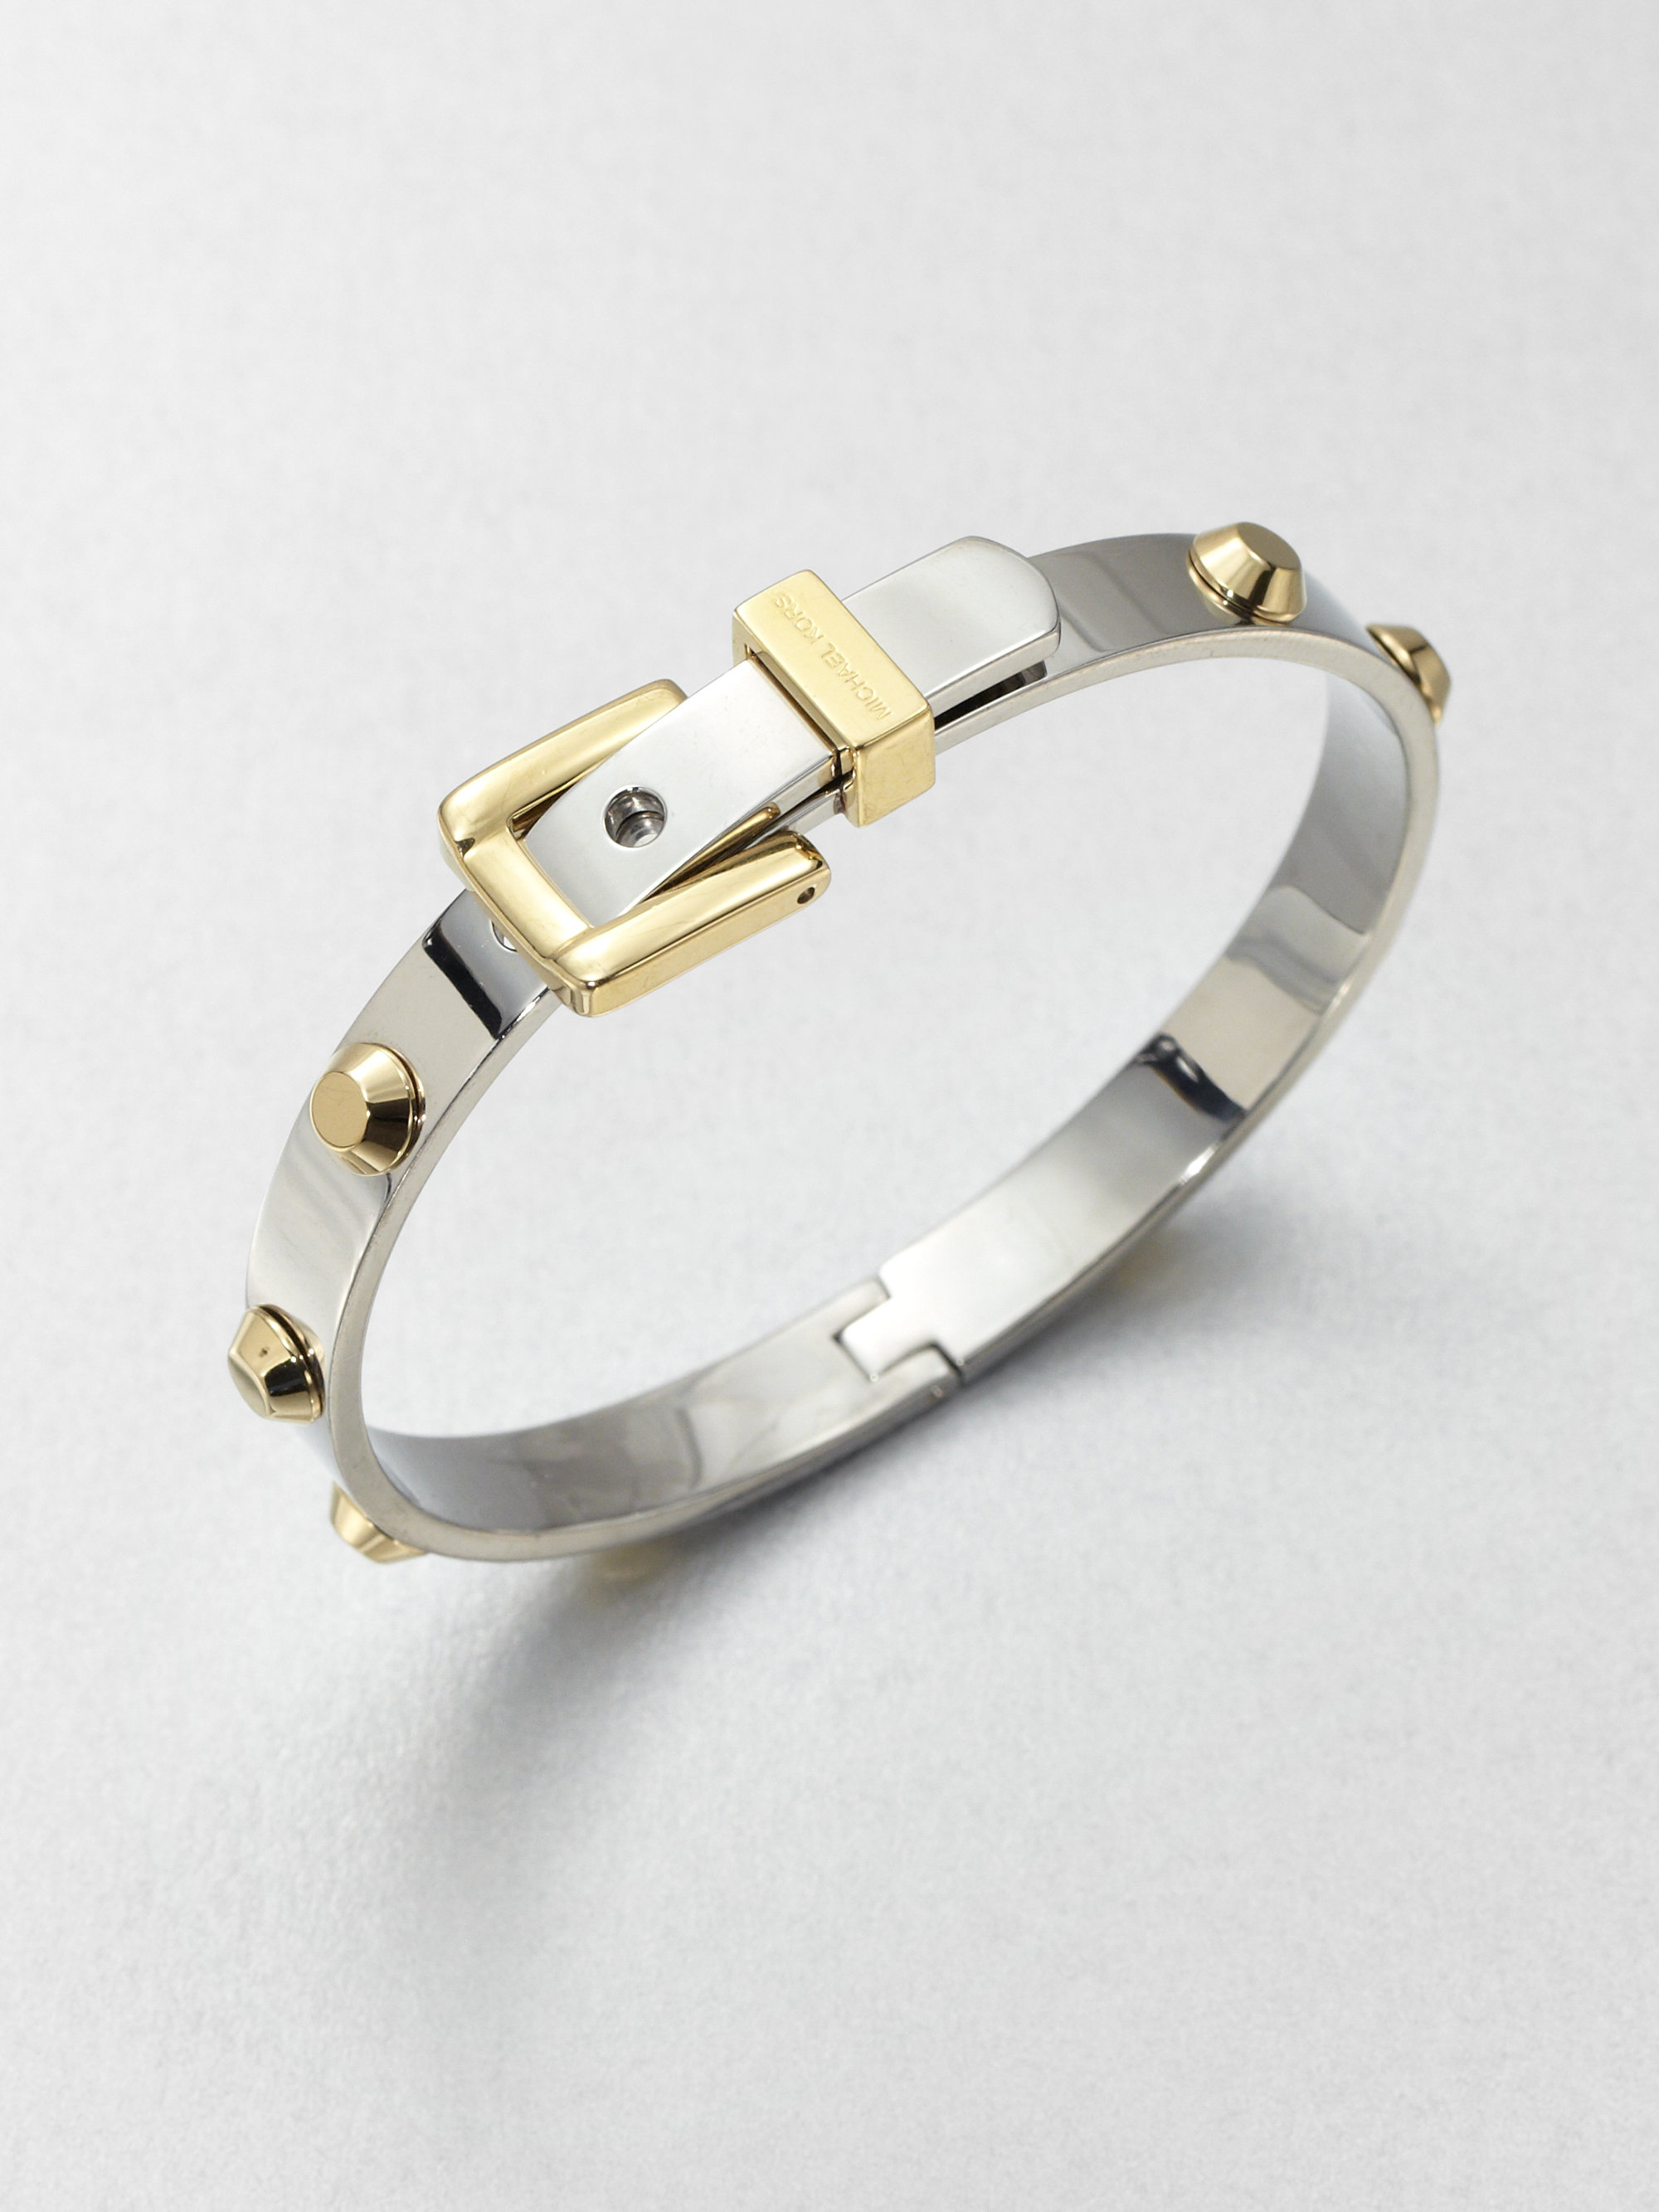 michael kors gold fashion buckle ring sz 7  eBay